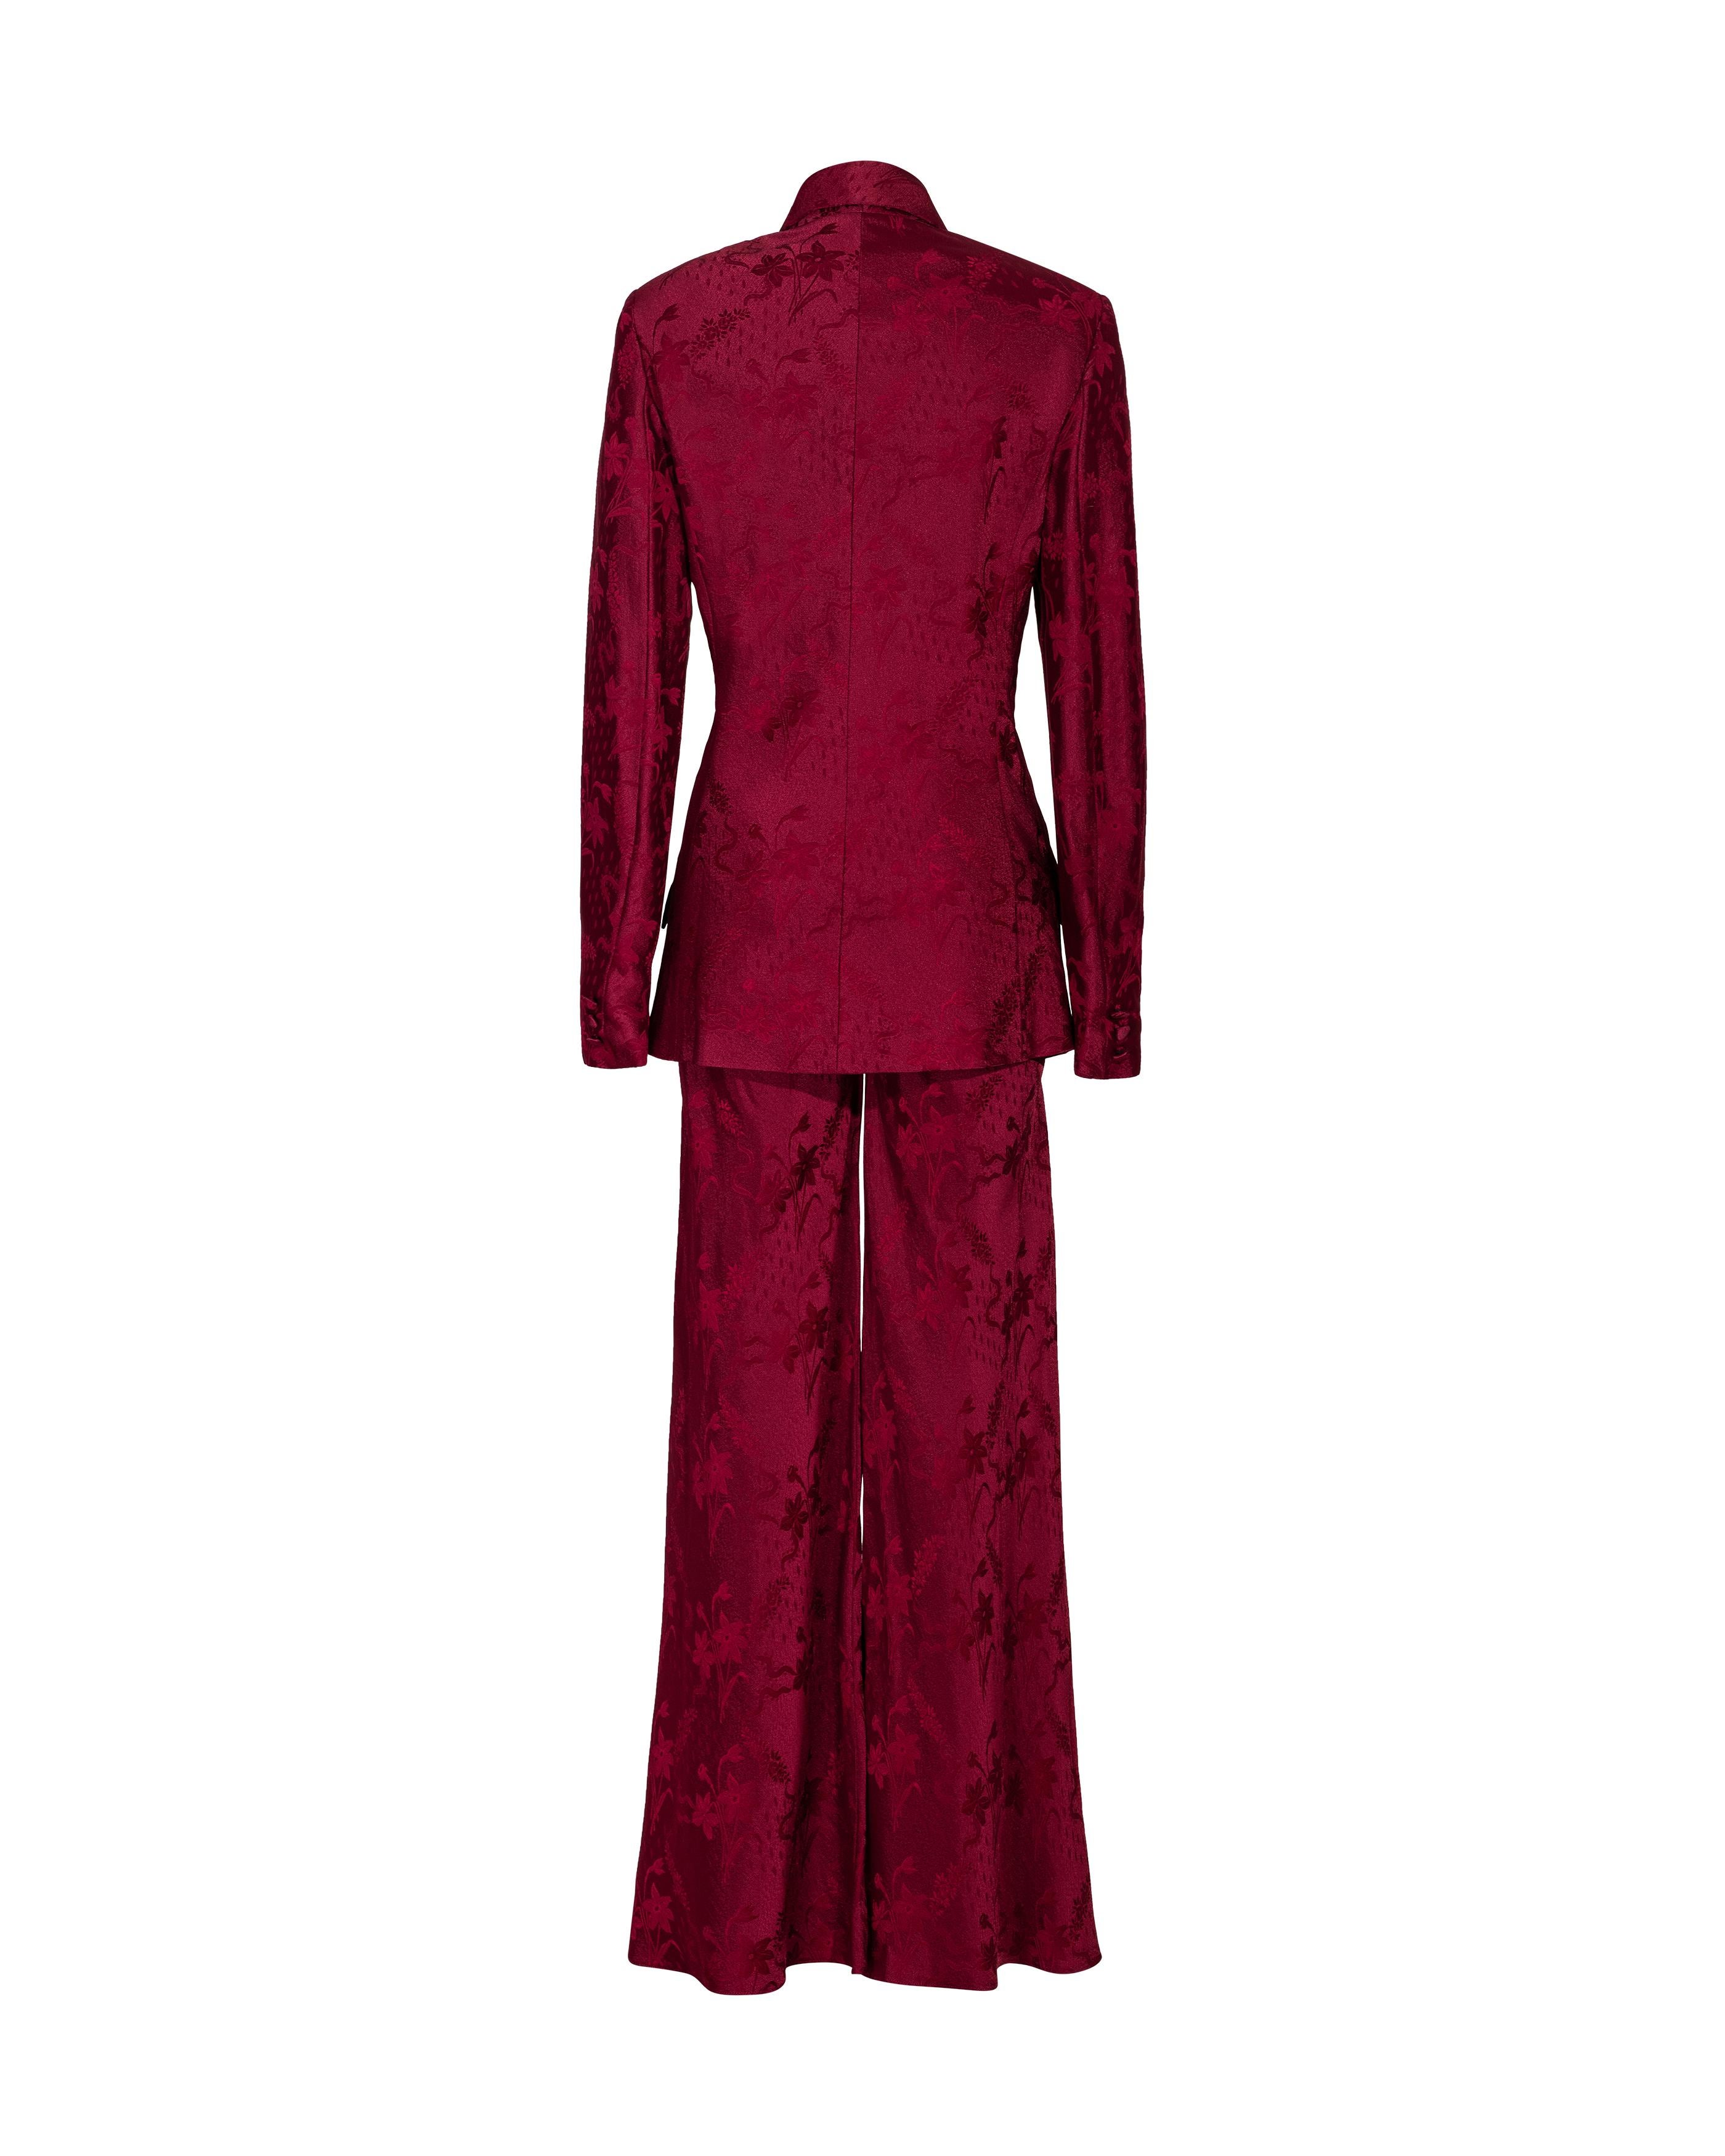 Women's S/S 1998 John Galliano Deep Red Floral Pattern Pant Suit Set